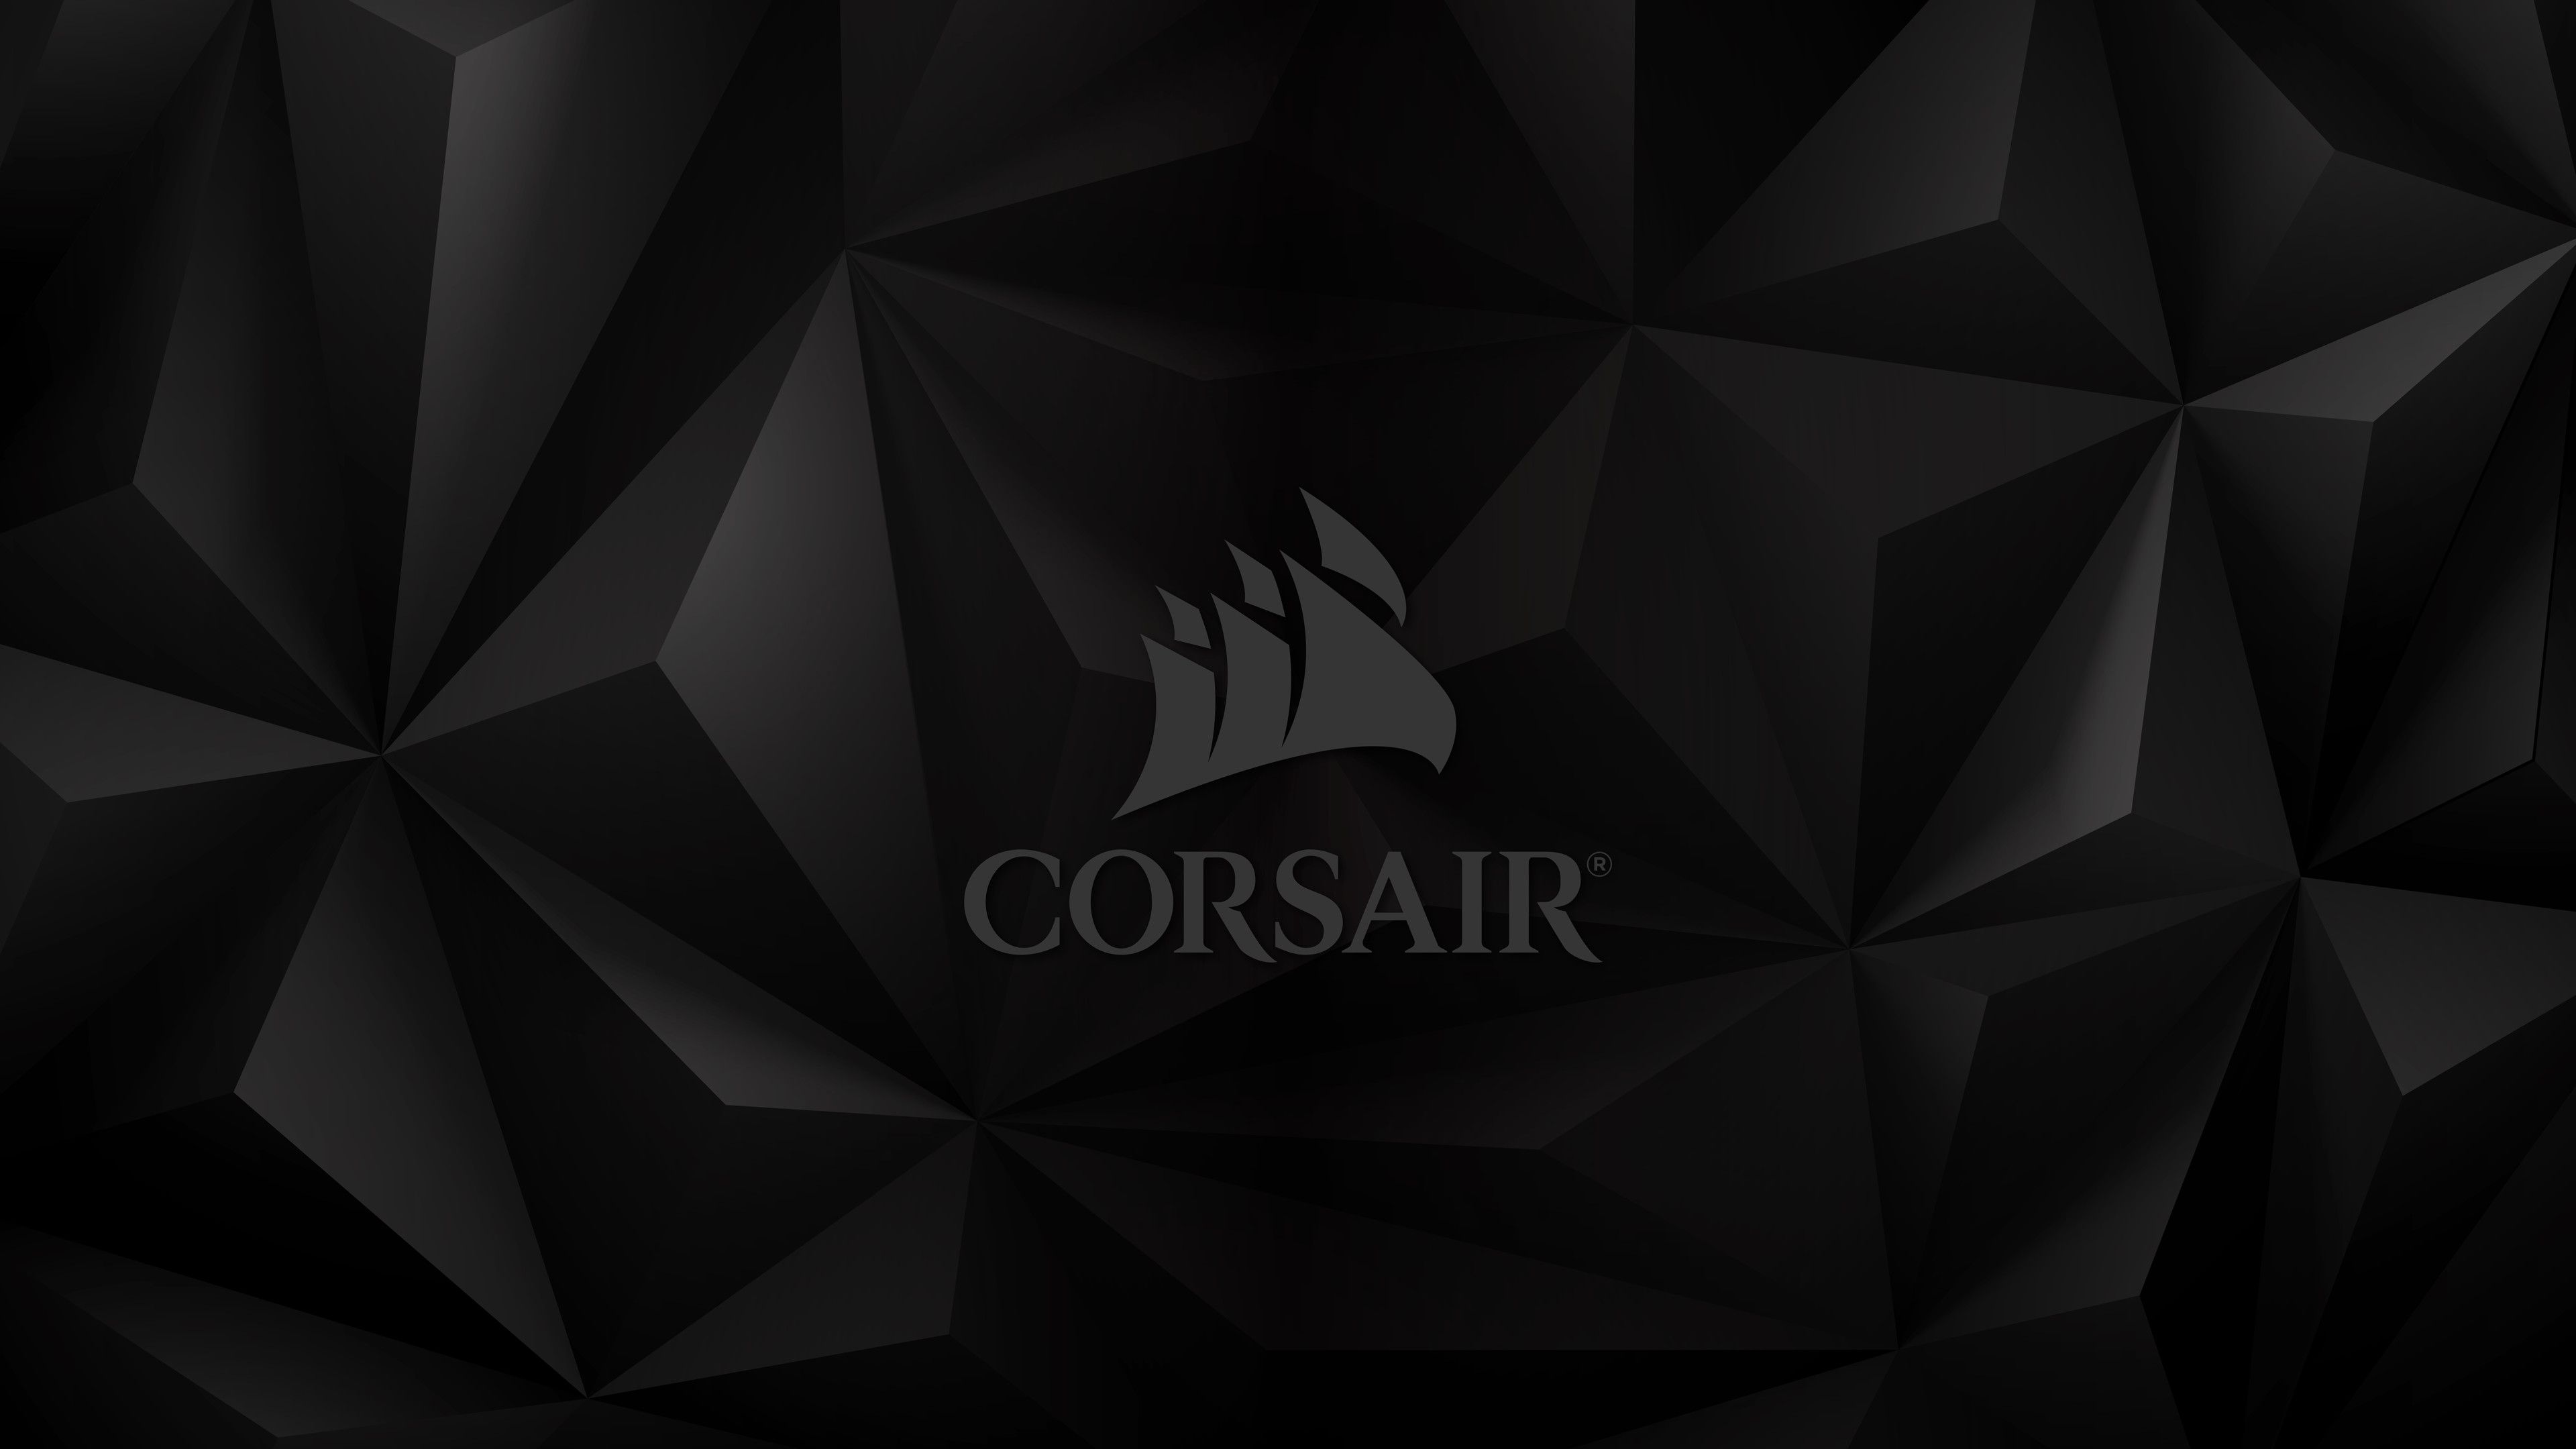 Corsair Gaming Wallpaper (best Corsair Gaming Wallpaper and image) on WallpaperChat